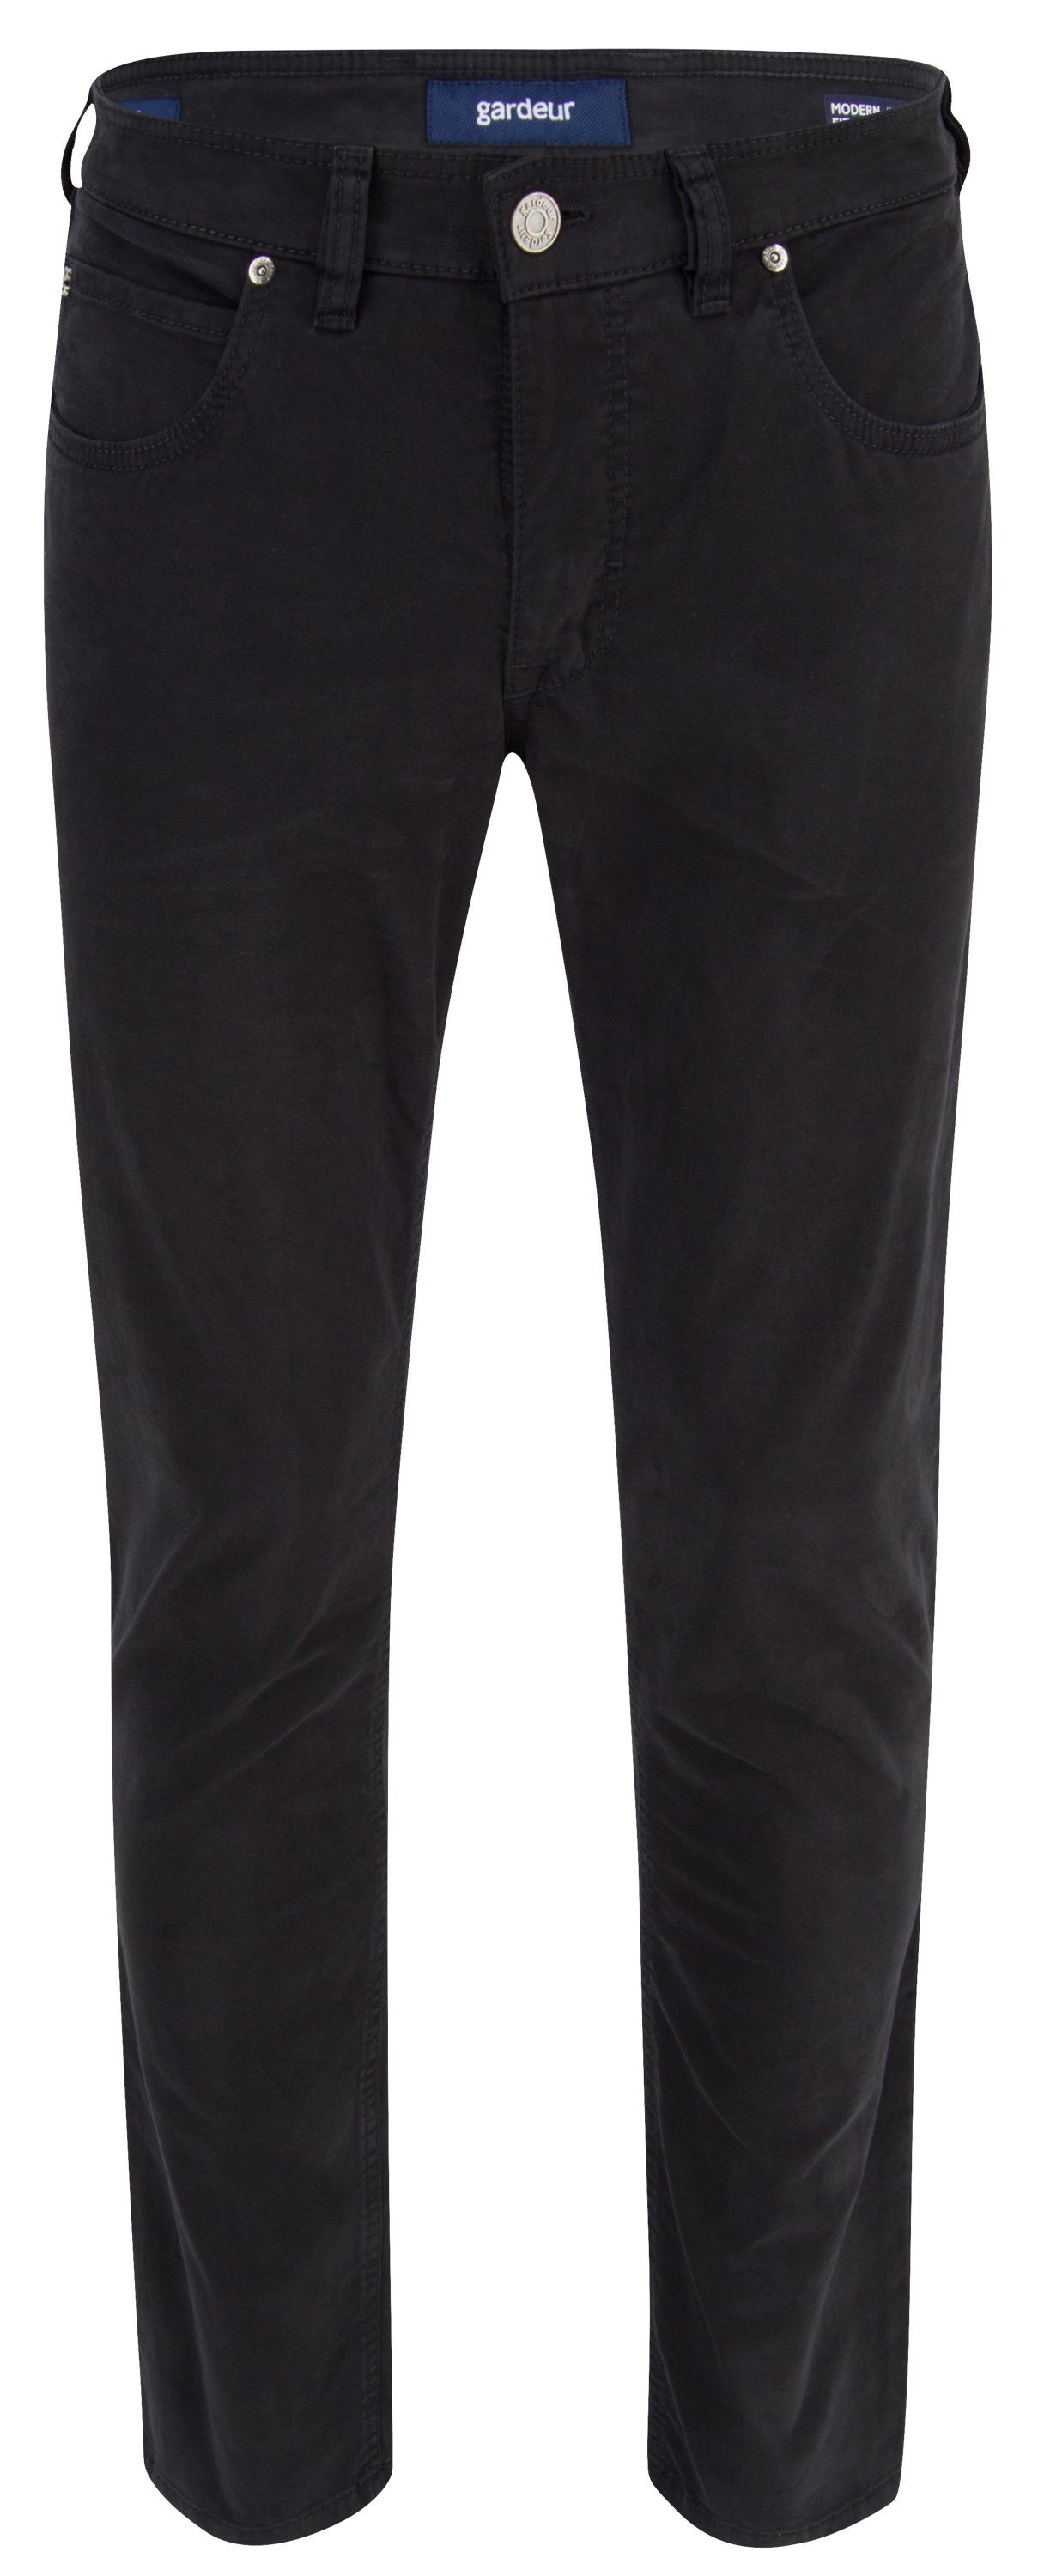 Atelier GARDEUR 5-Pocket-Jeans ATELIER GARDEUR BILL black 3-0-413861-99